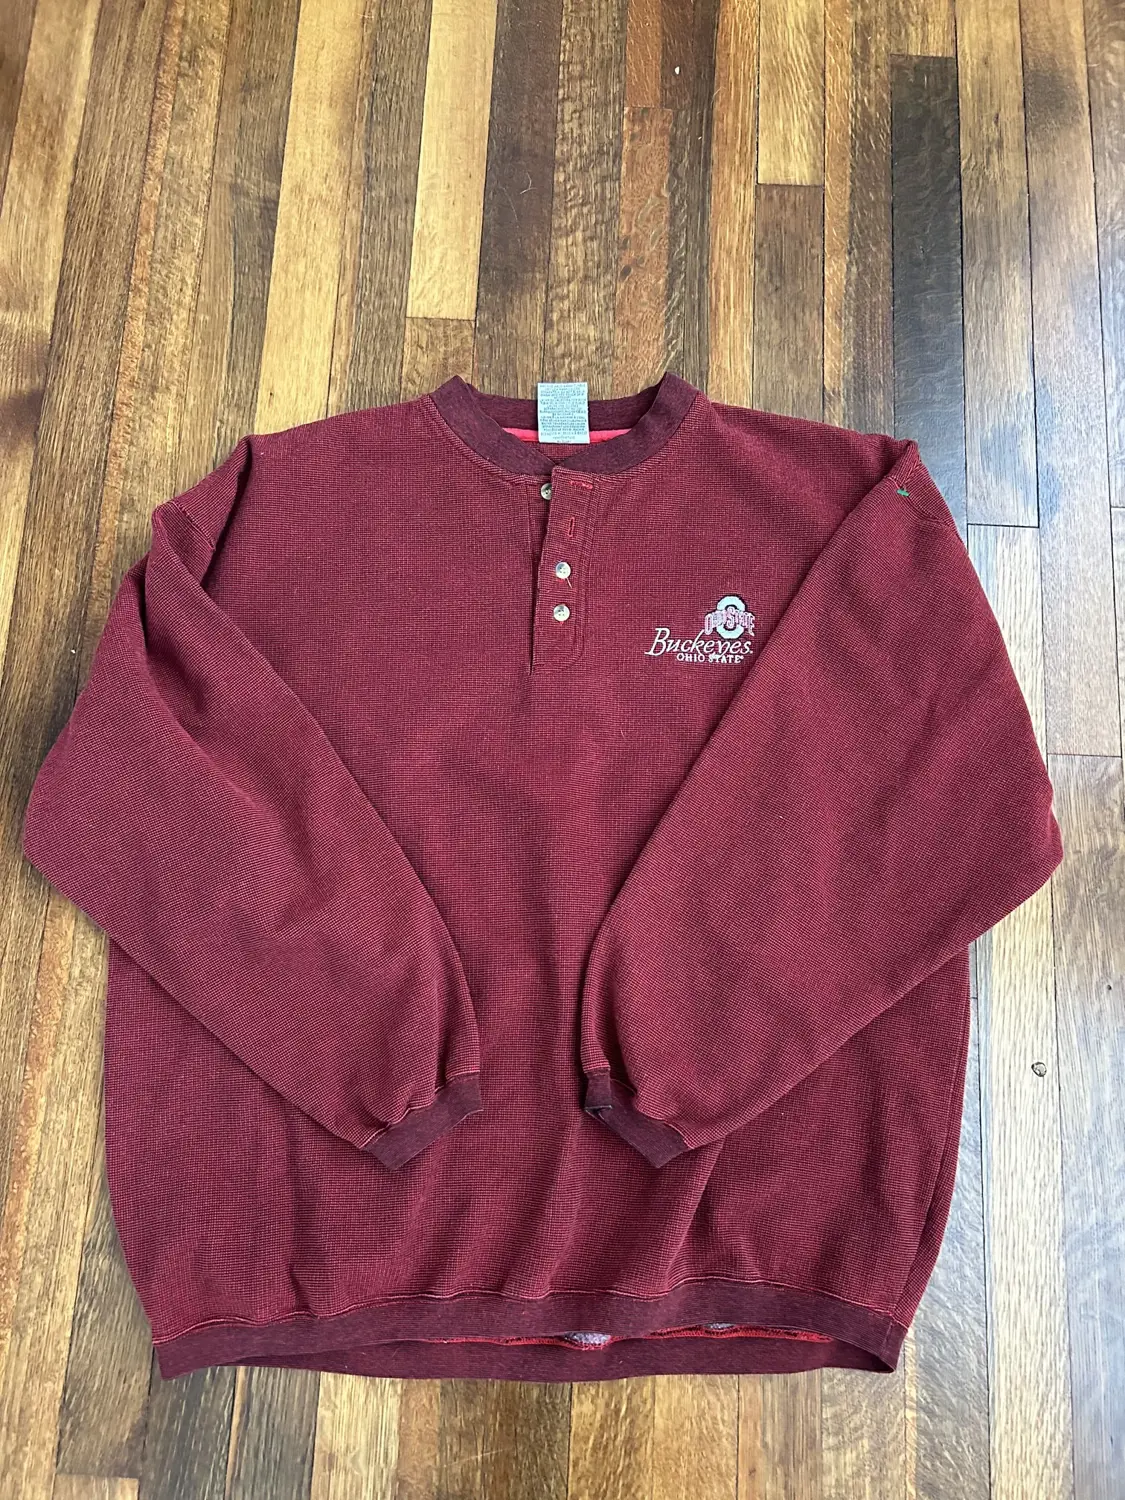 Vintage Ohio State Sweater